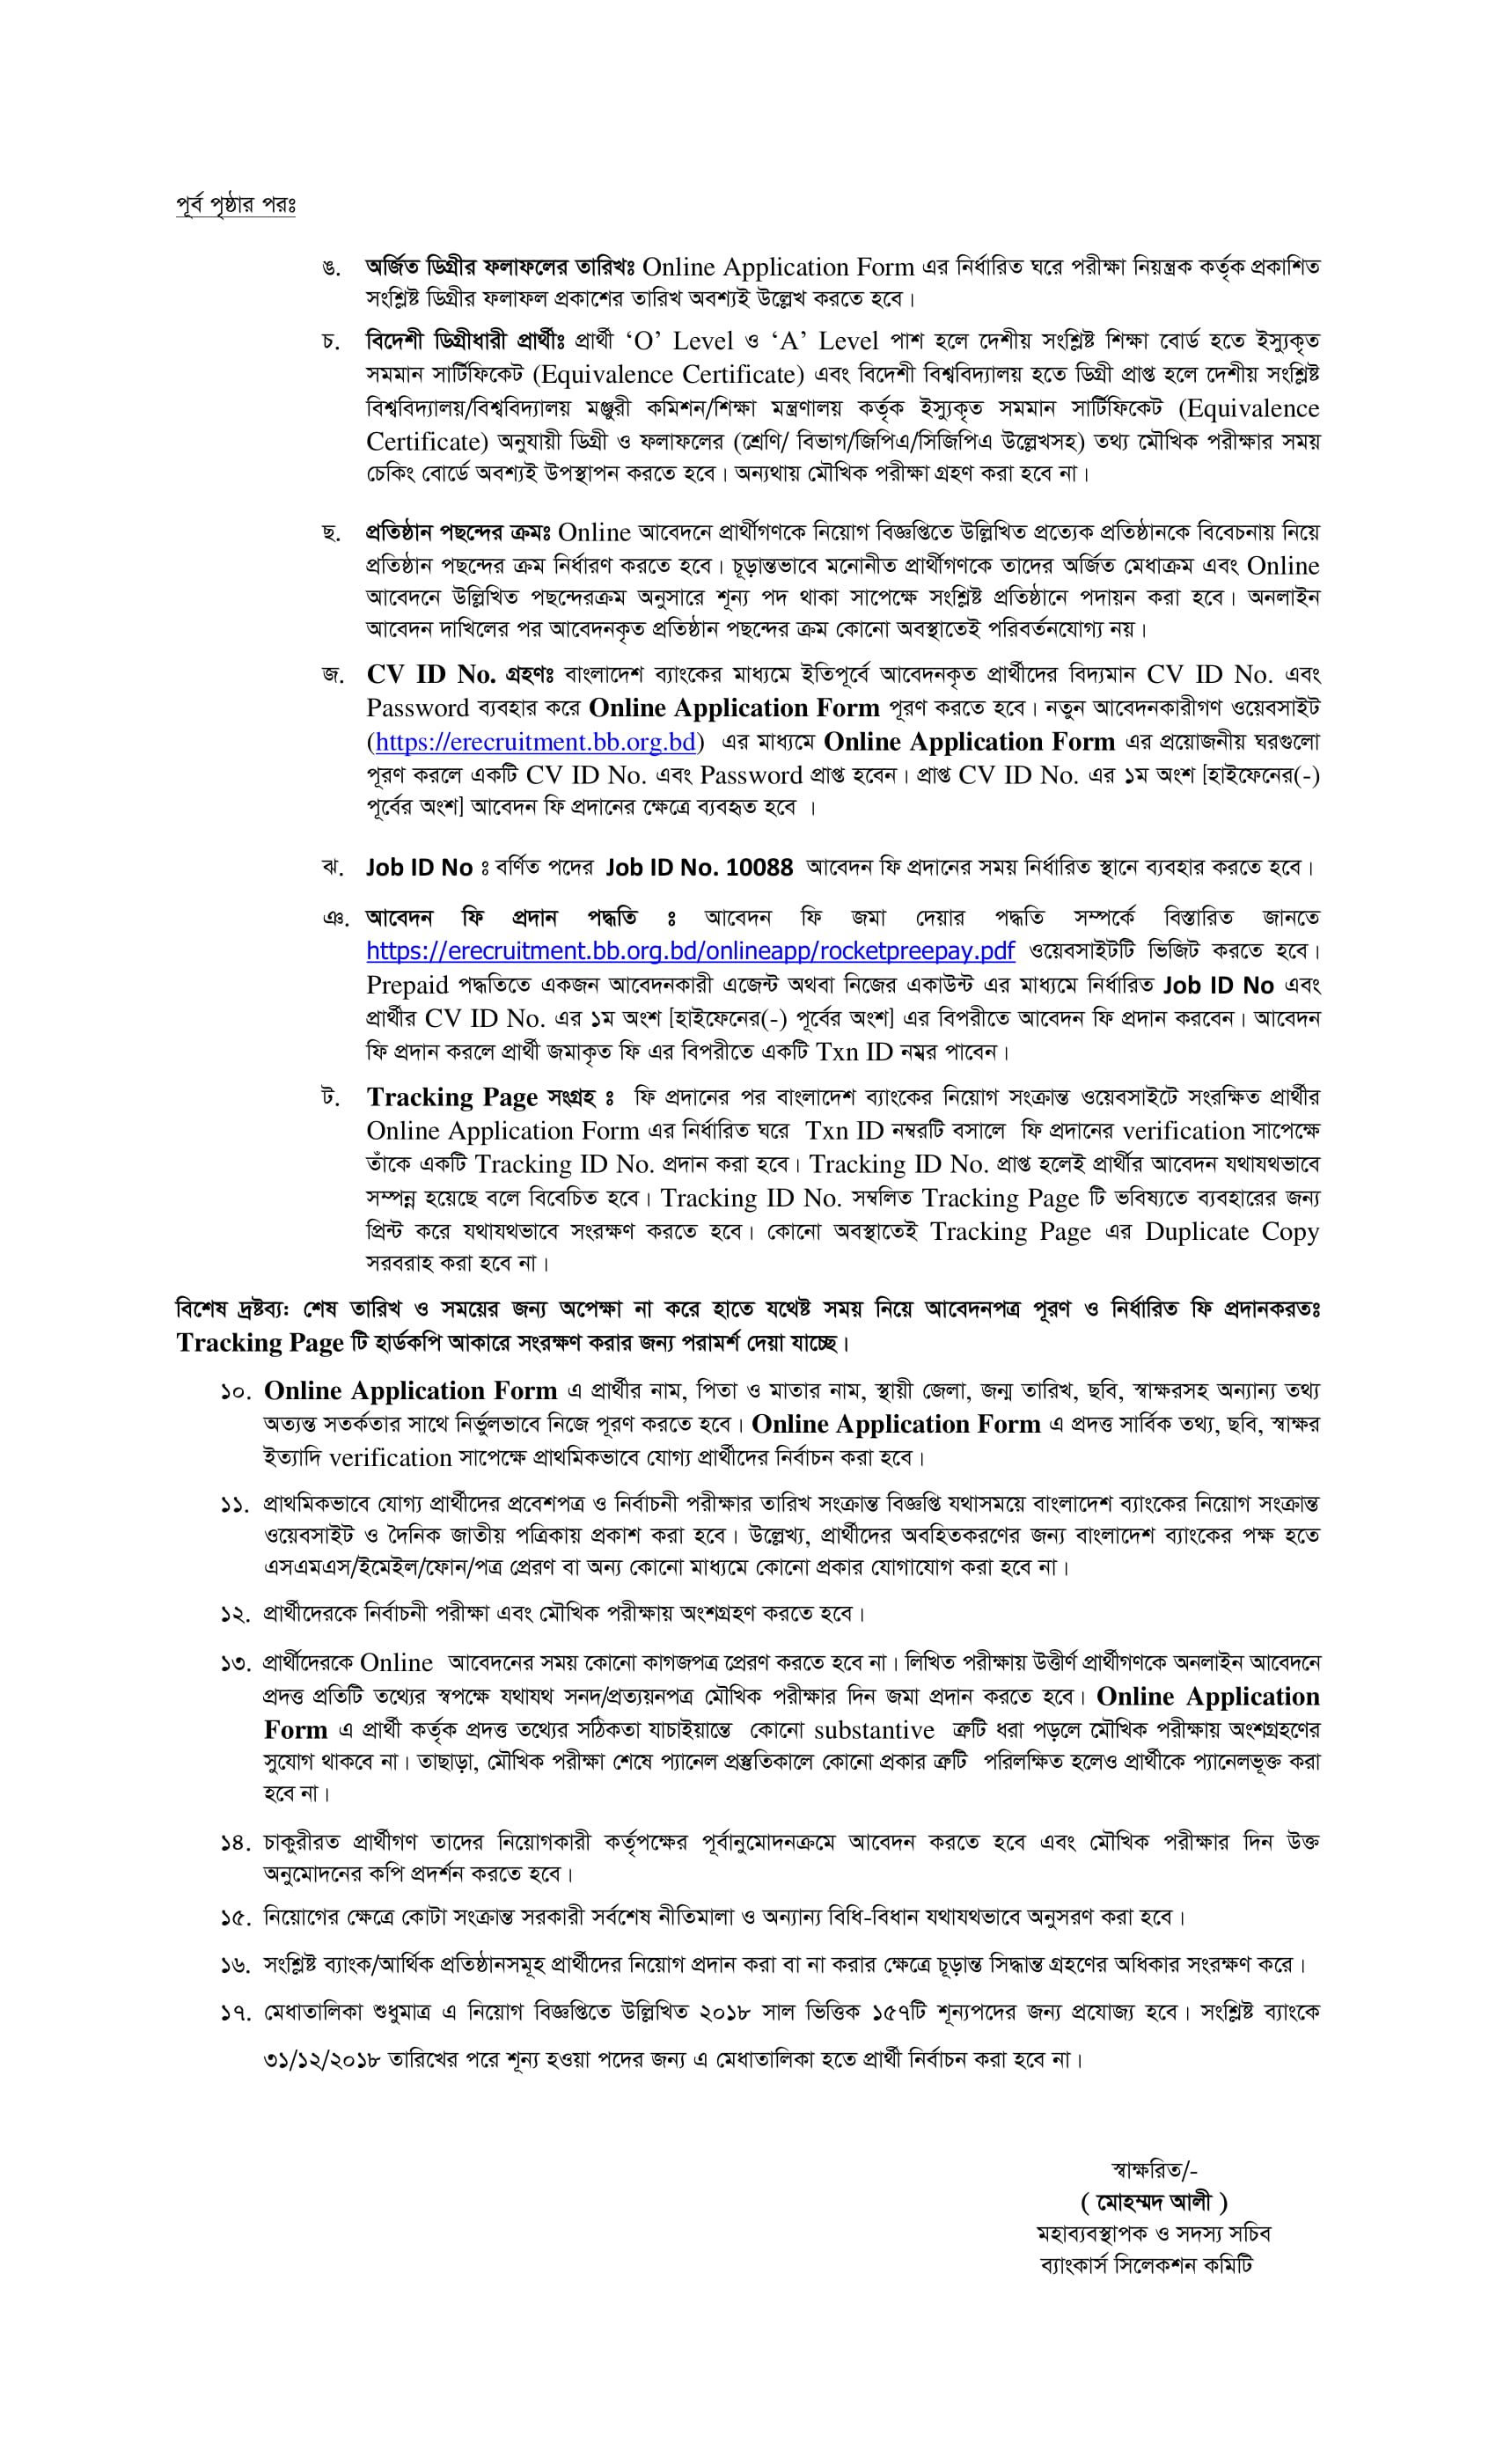 Sonali Bank & Janata Bank Ltd Job Circular 2020